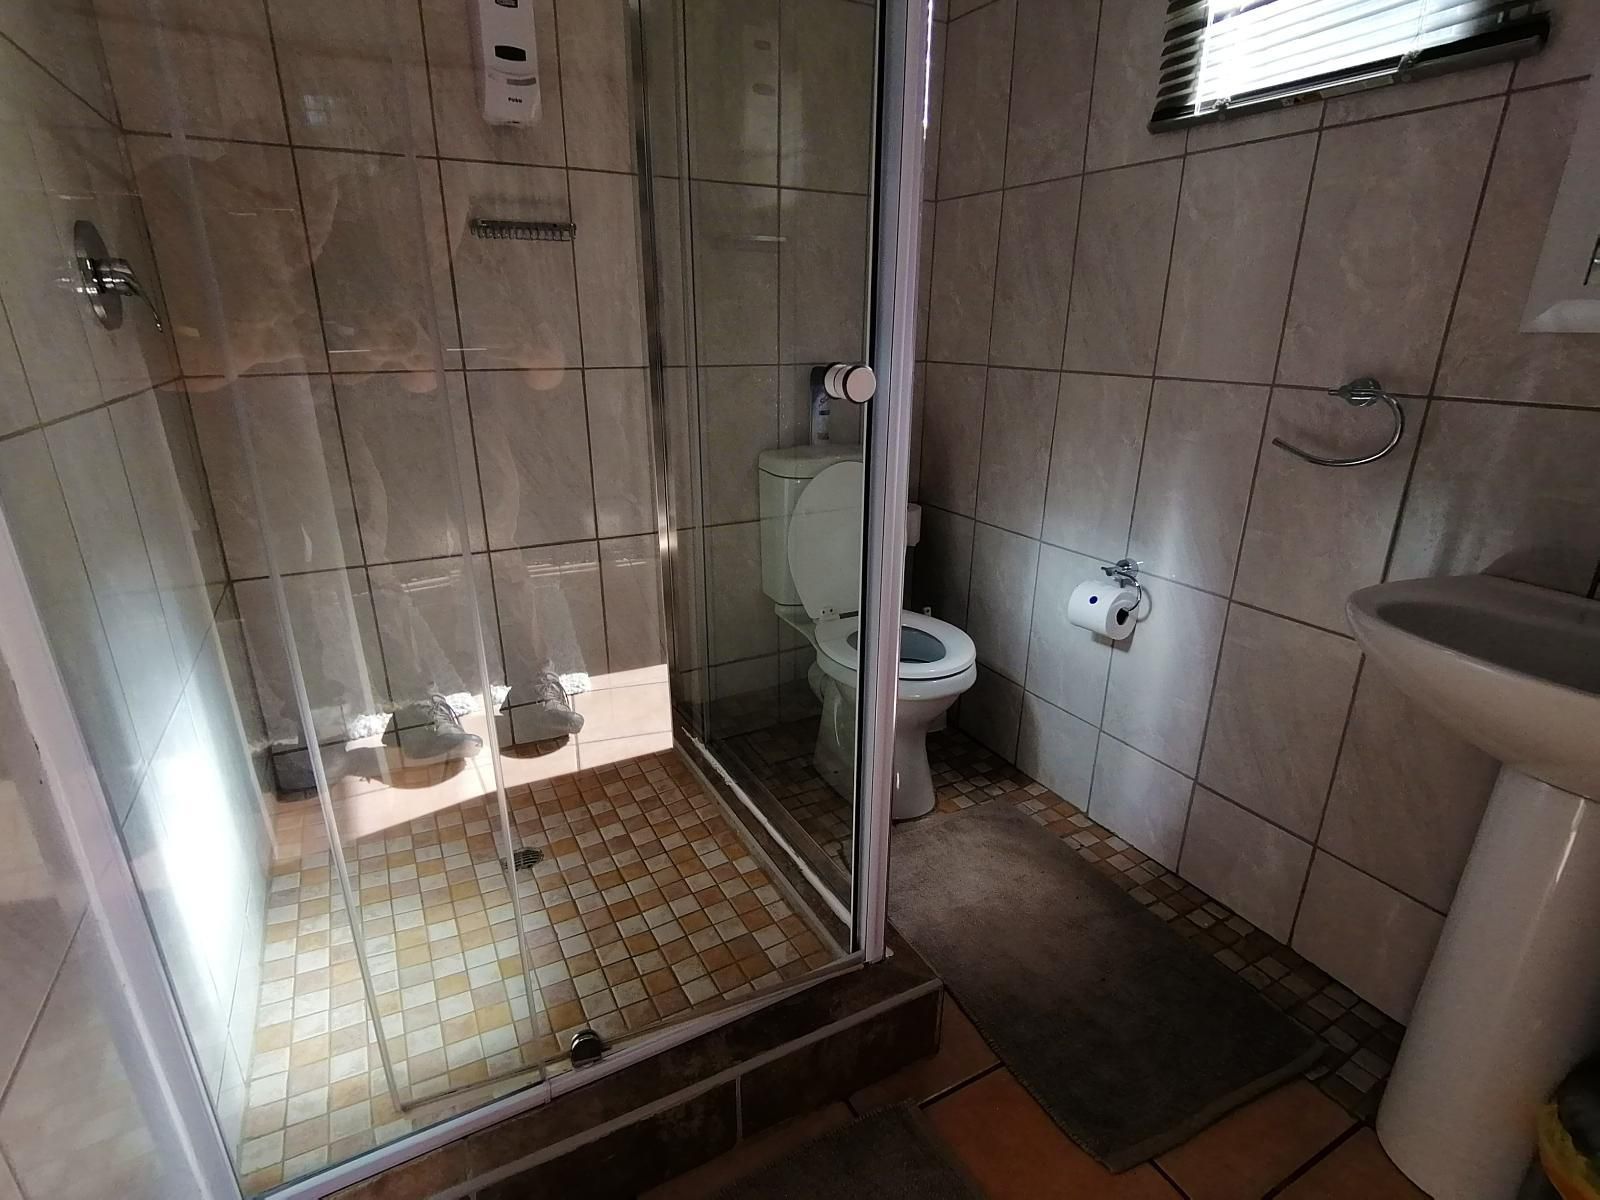 Purdy S Place Makhado Louis Trichardt Limpopo Province South Africa Bathroom